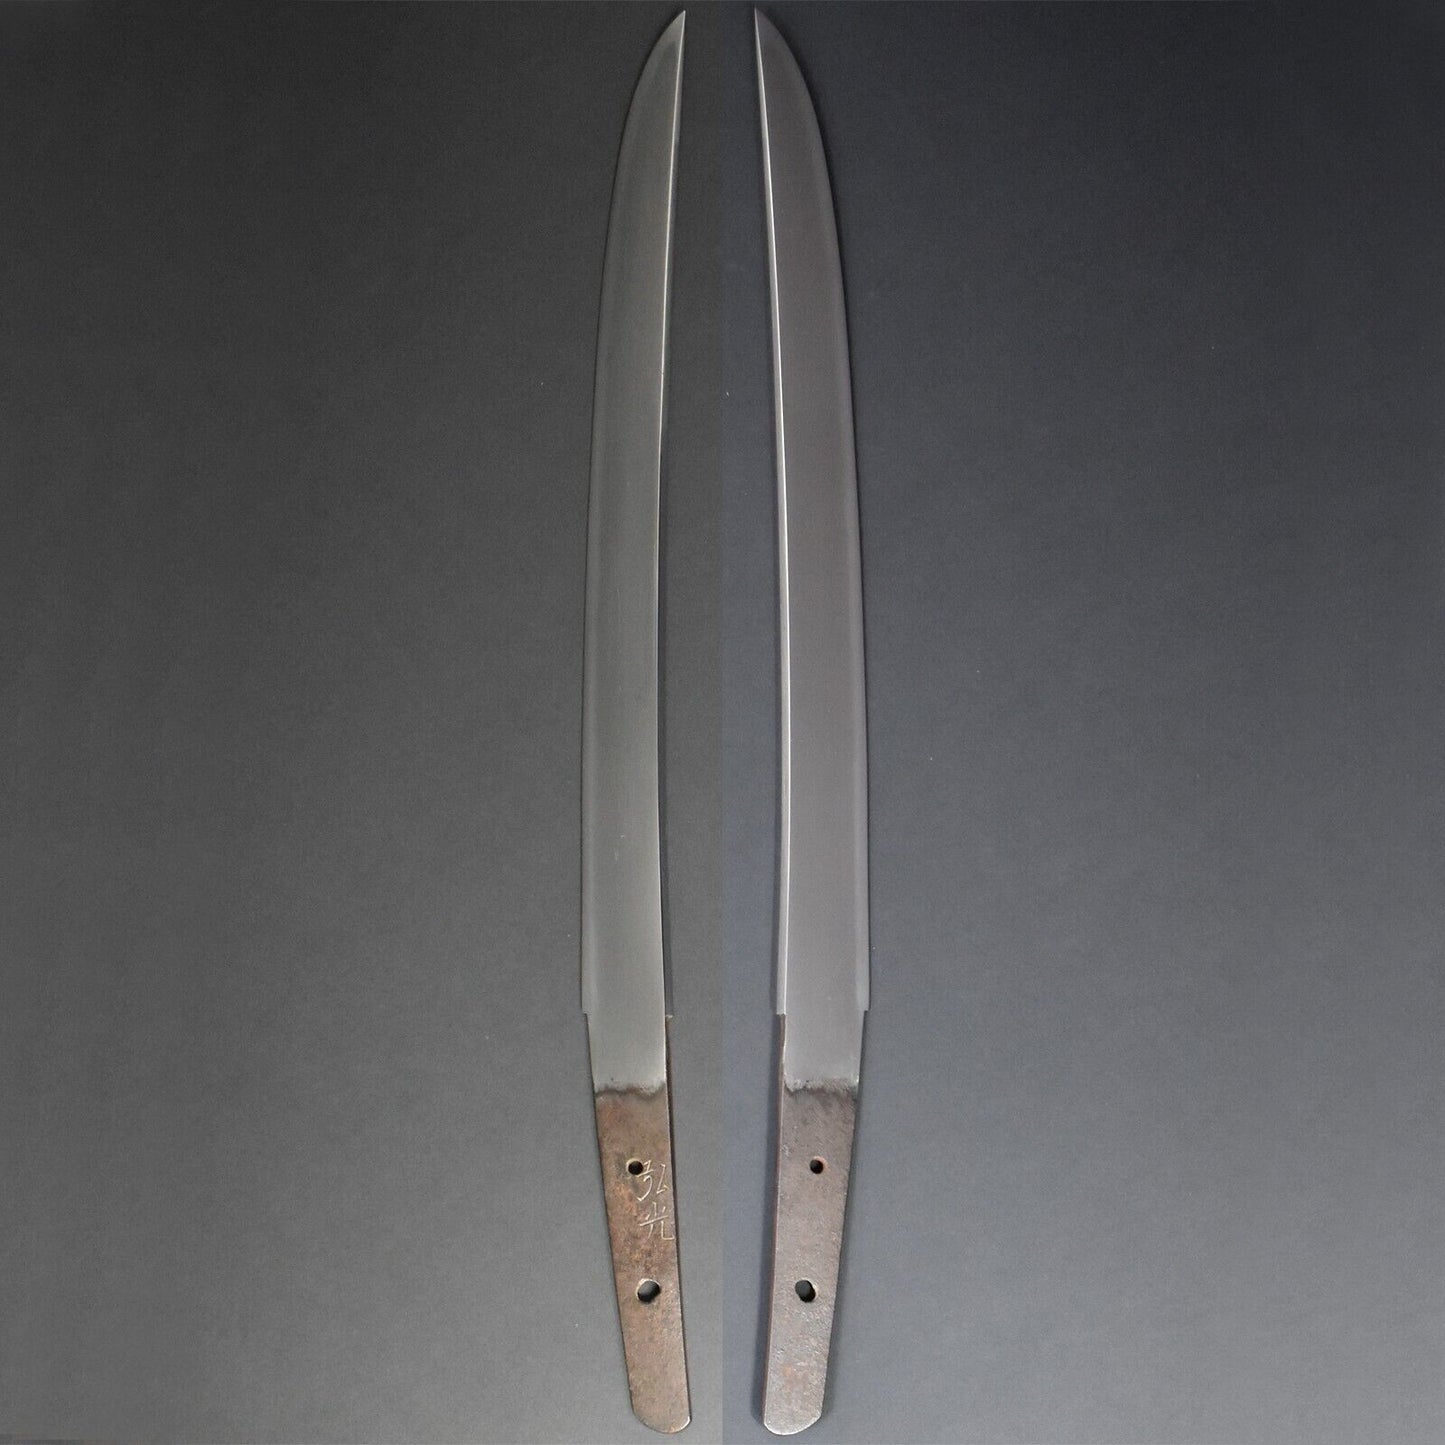 Authentic Antique Muromachi Era Japanese Sword Wakizashi Kanenaga Signed Samurai Tamahagane Blade.